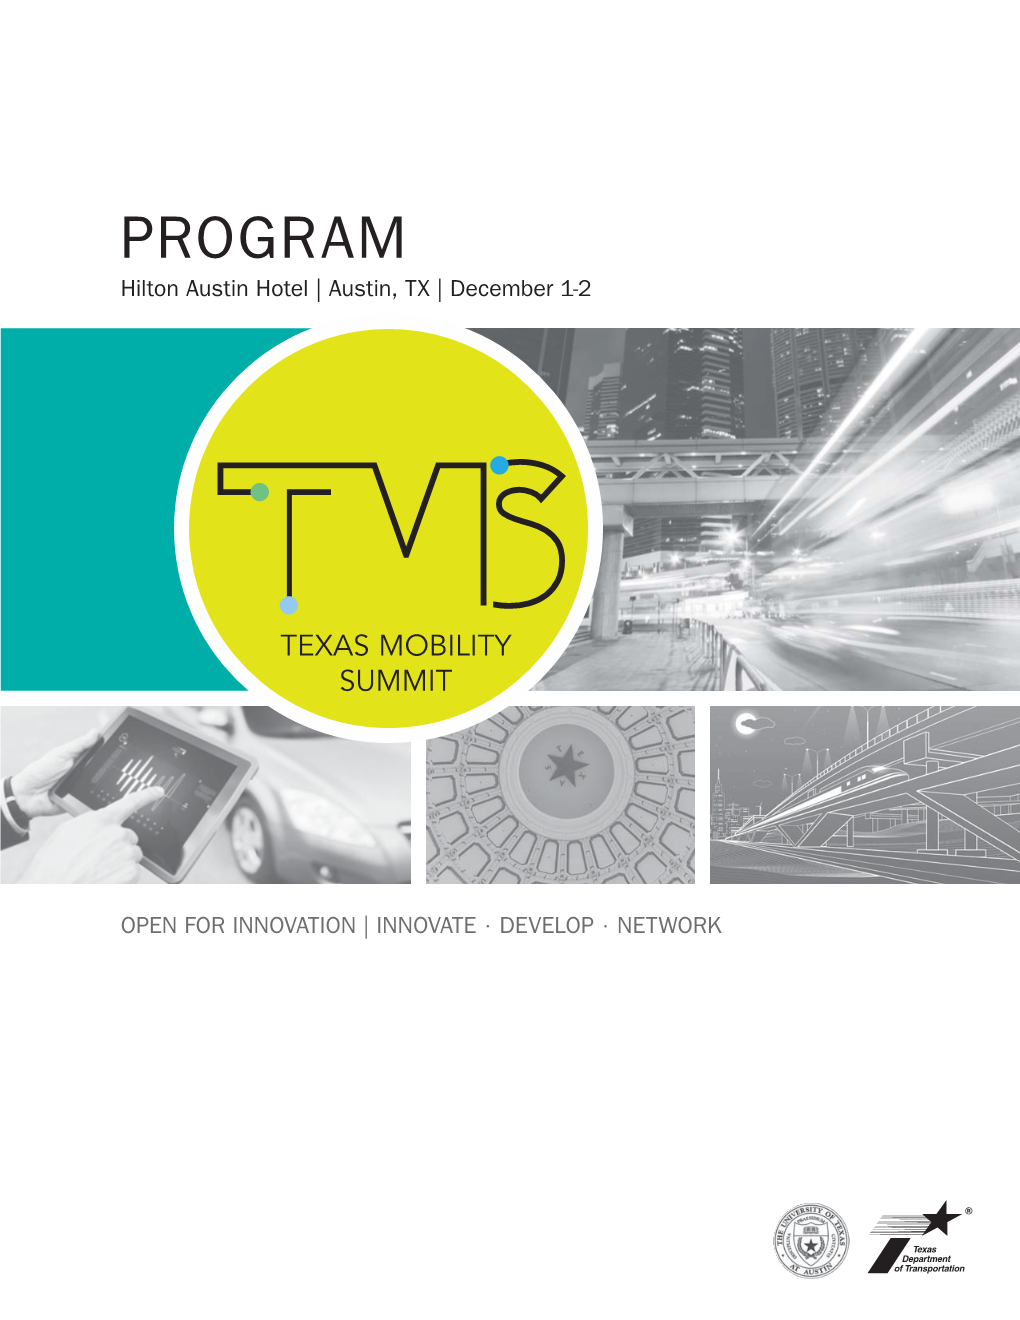 Texas Mobility Summit Program and Full Agenda, December 1-2, 2016